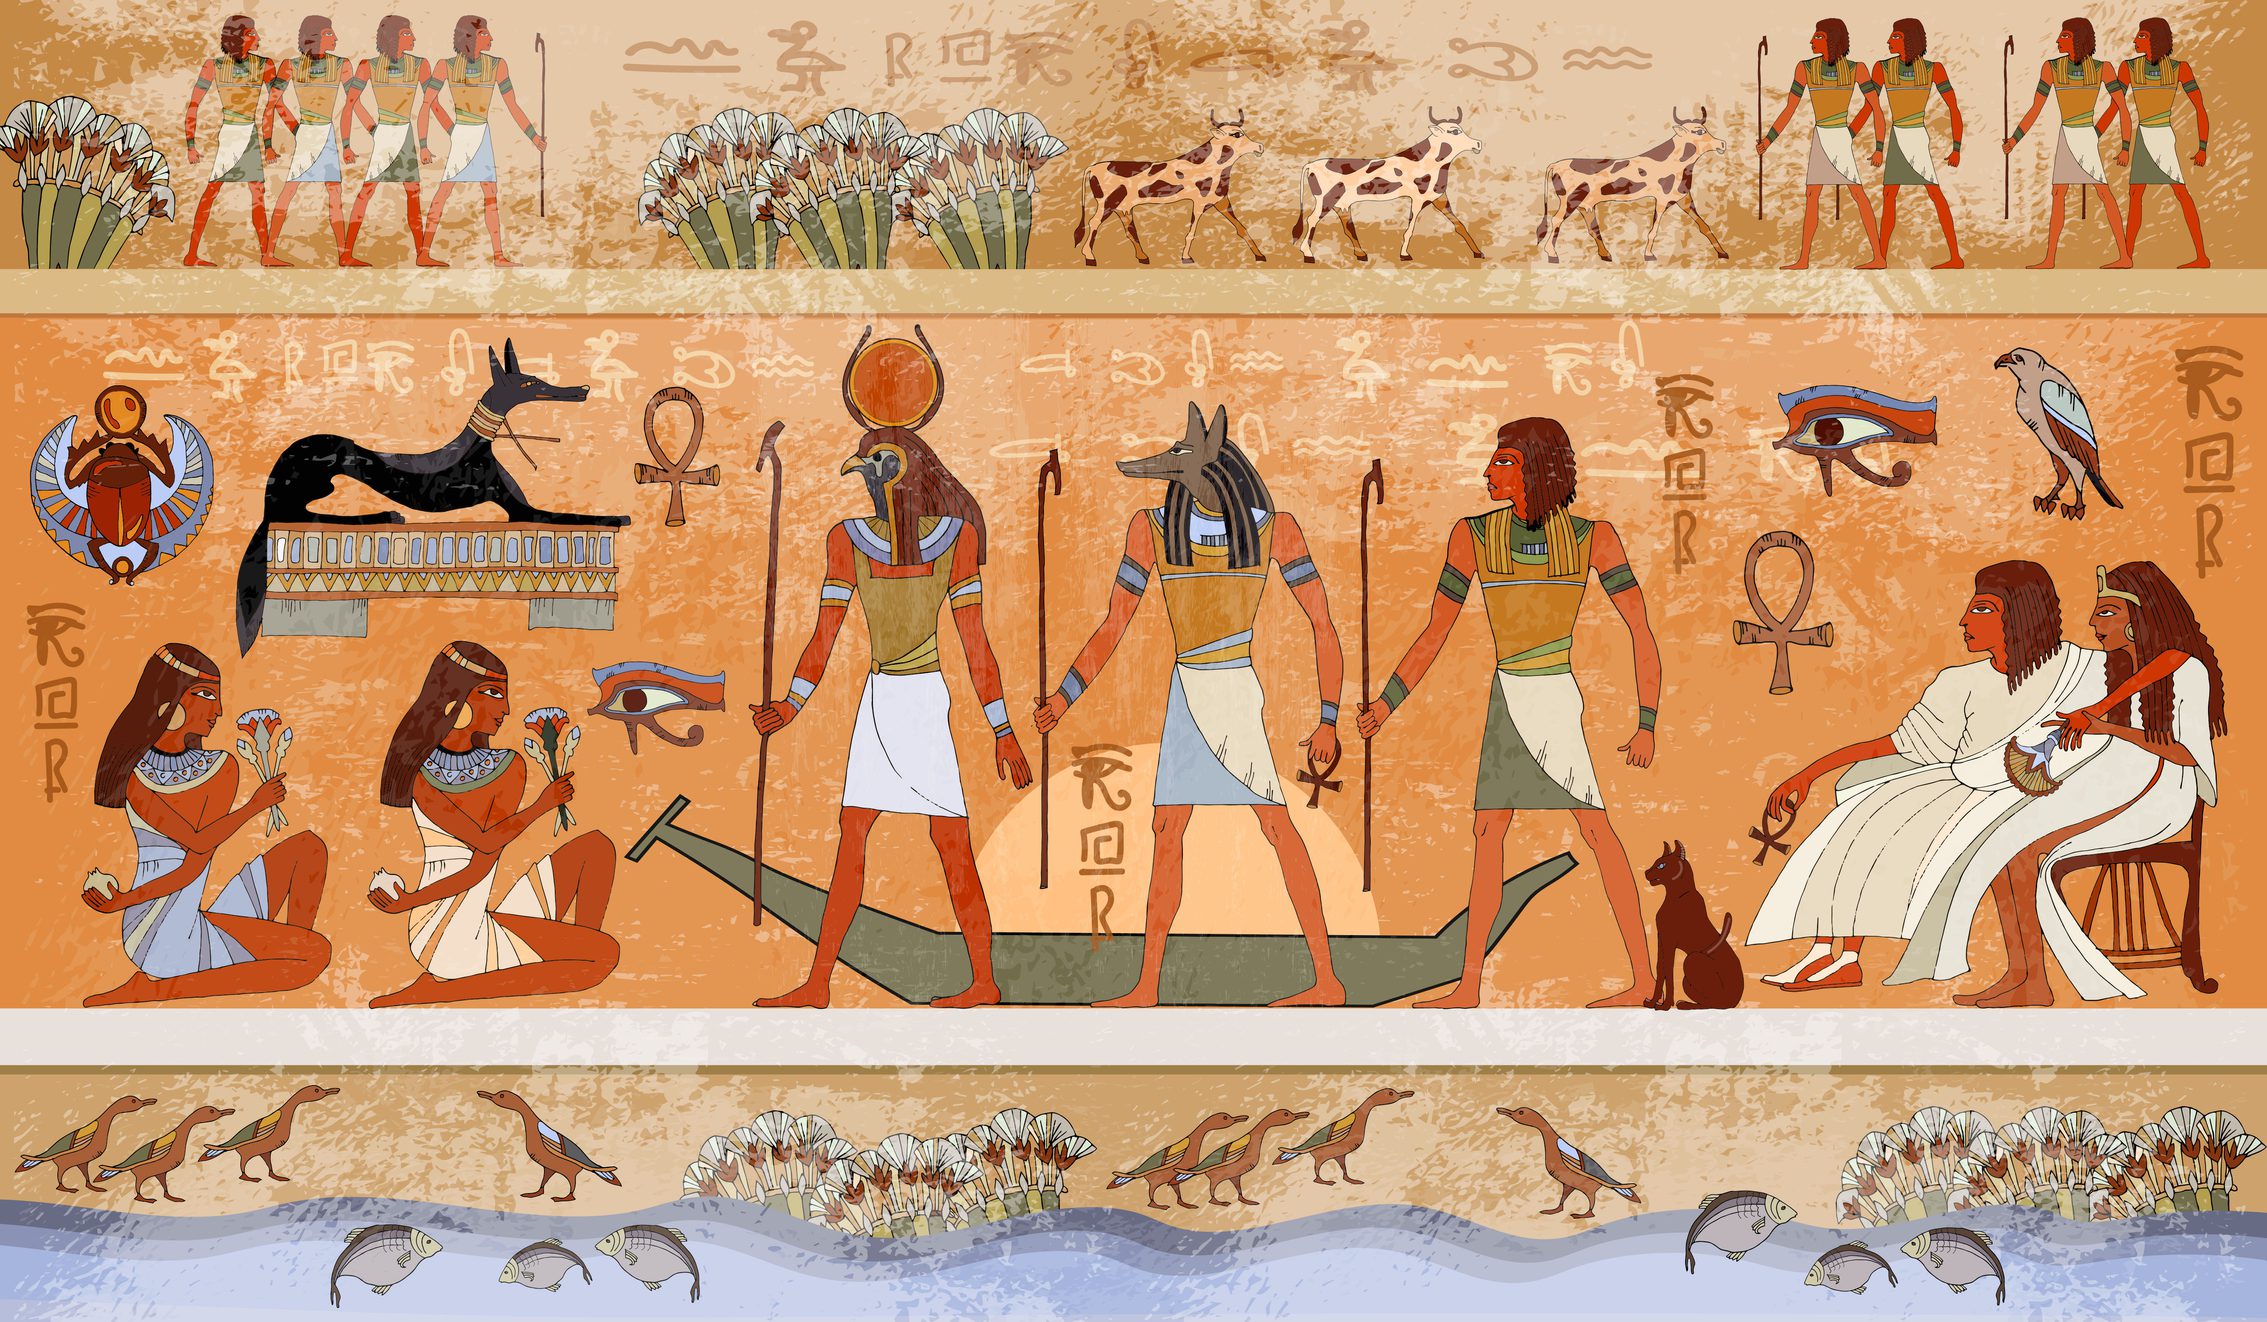 Ancient Egypt hieroglyphic scene of Egyptian mythology